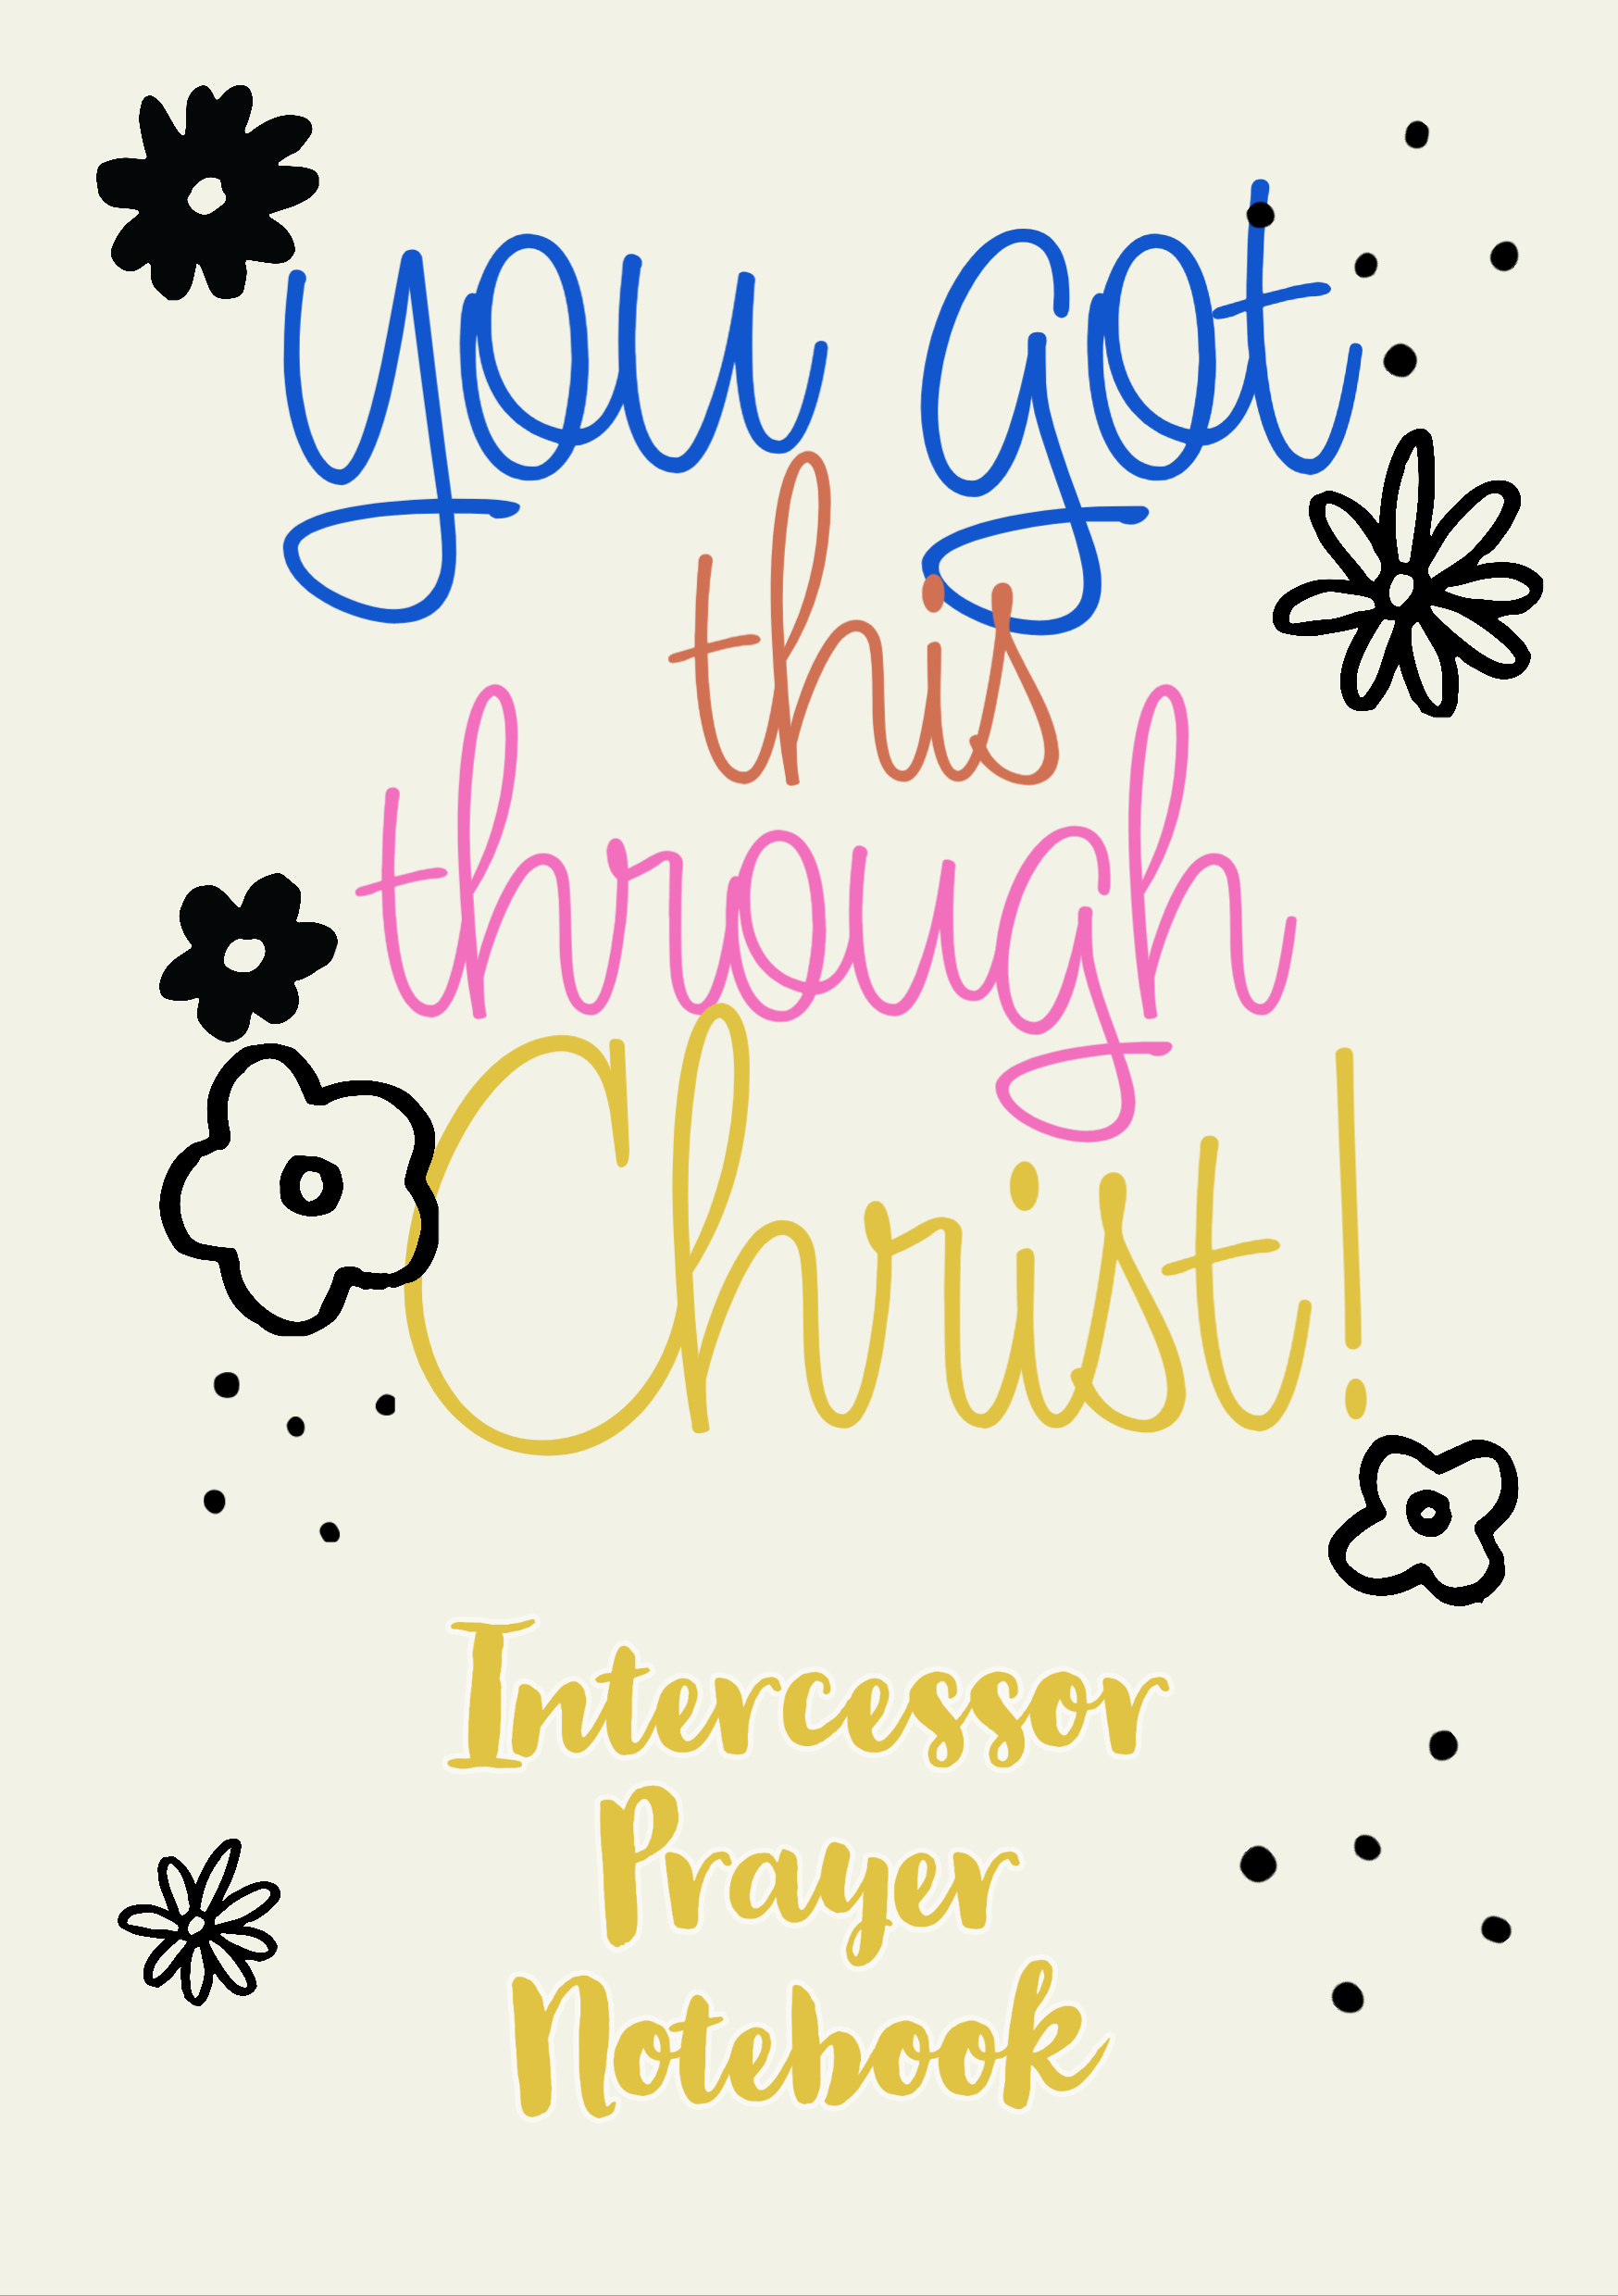 Intercessor's Prayer Notebook